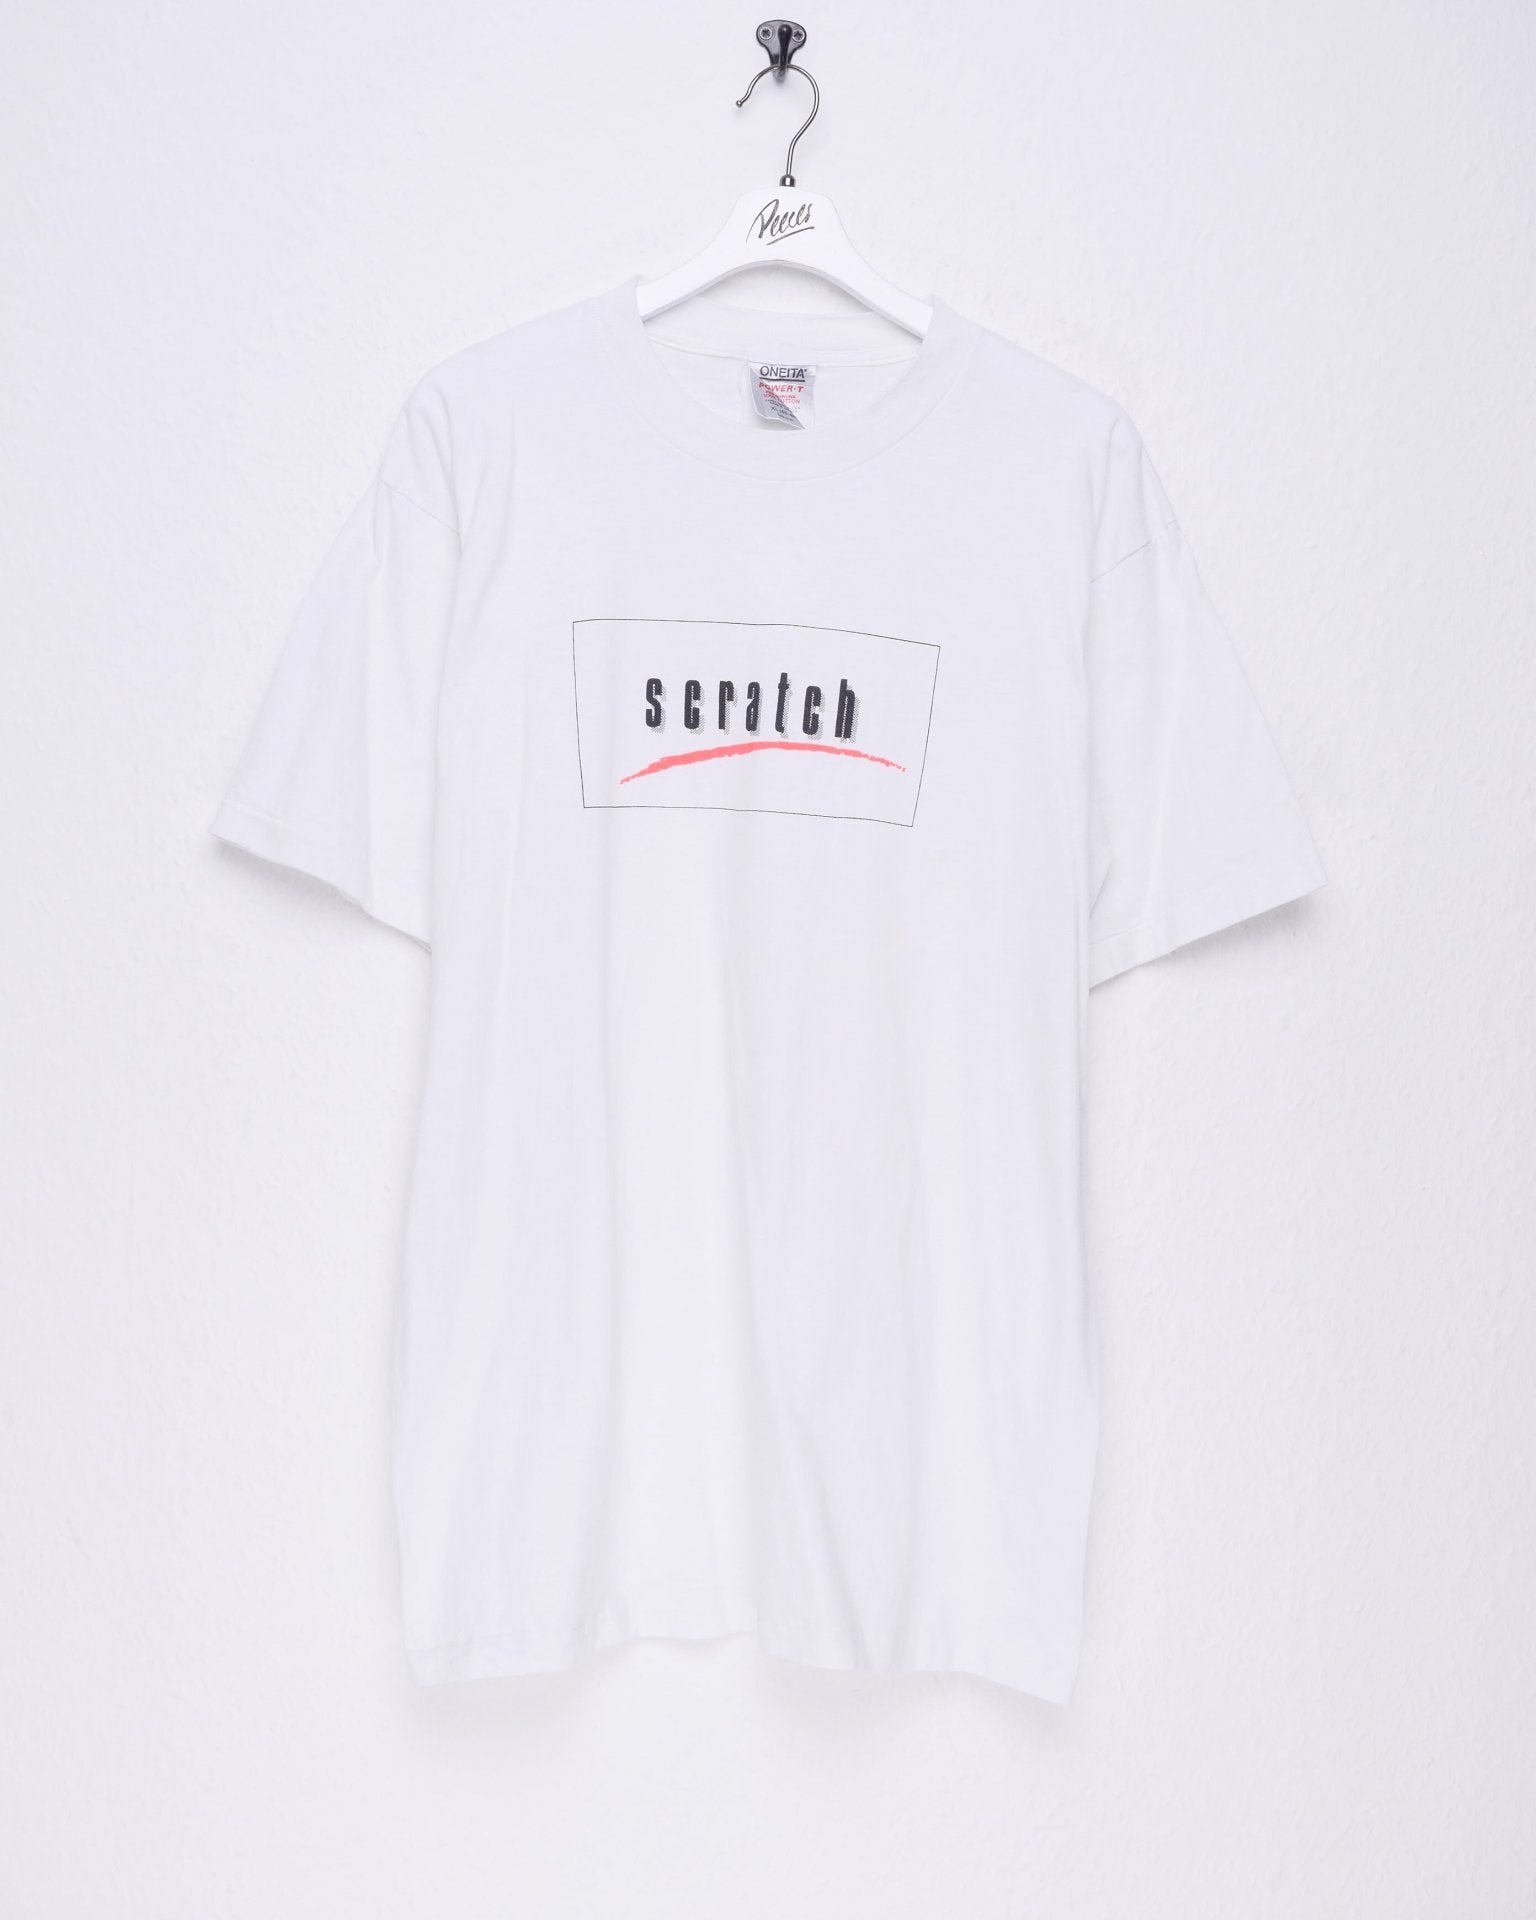 'Scratch' printed white Vintage Shirt - Peeces